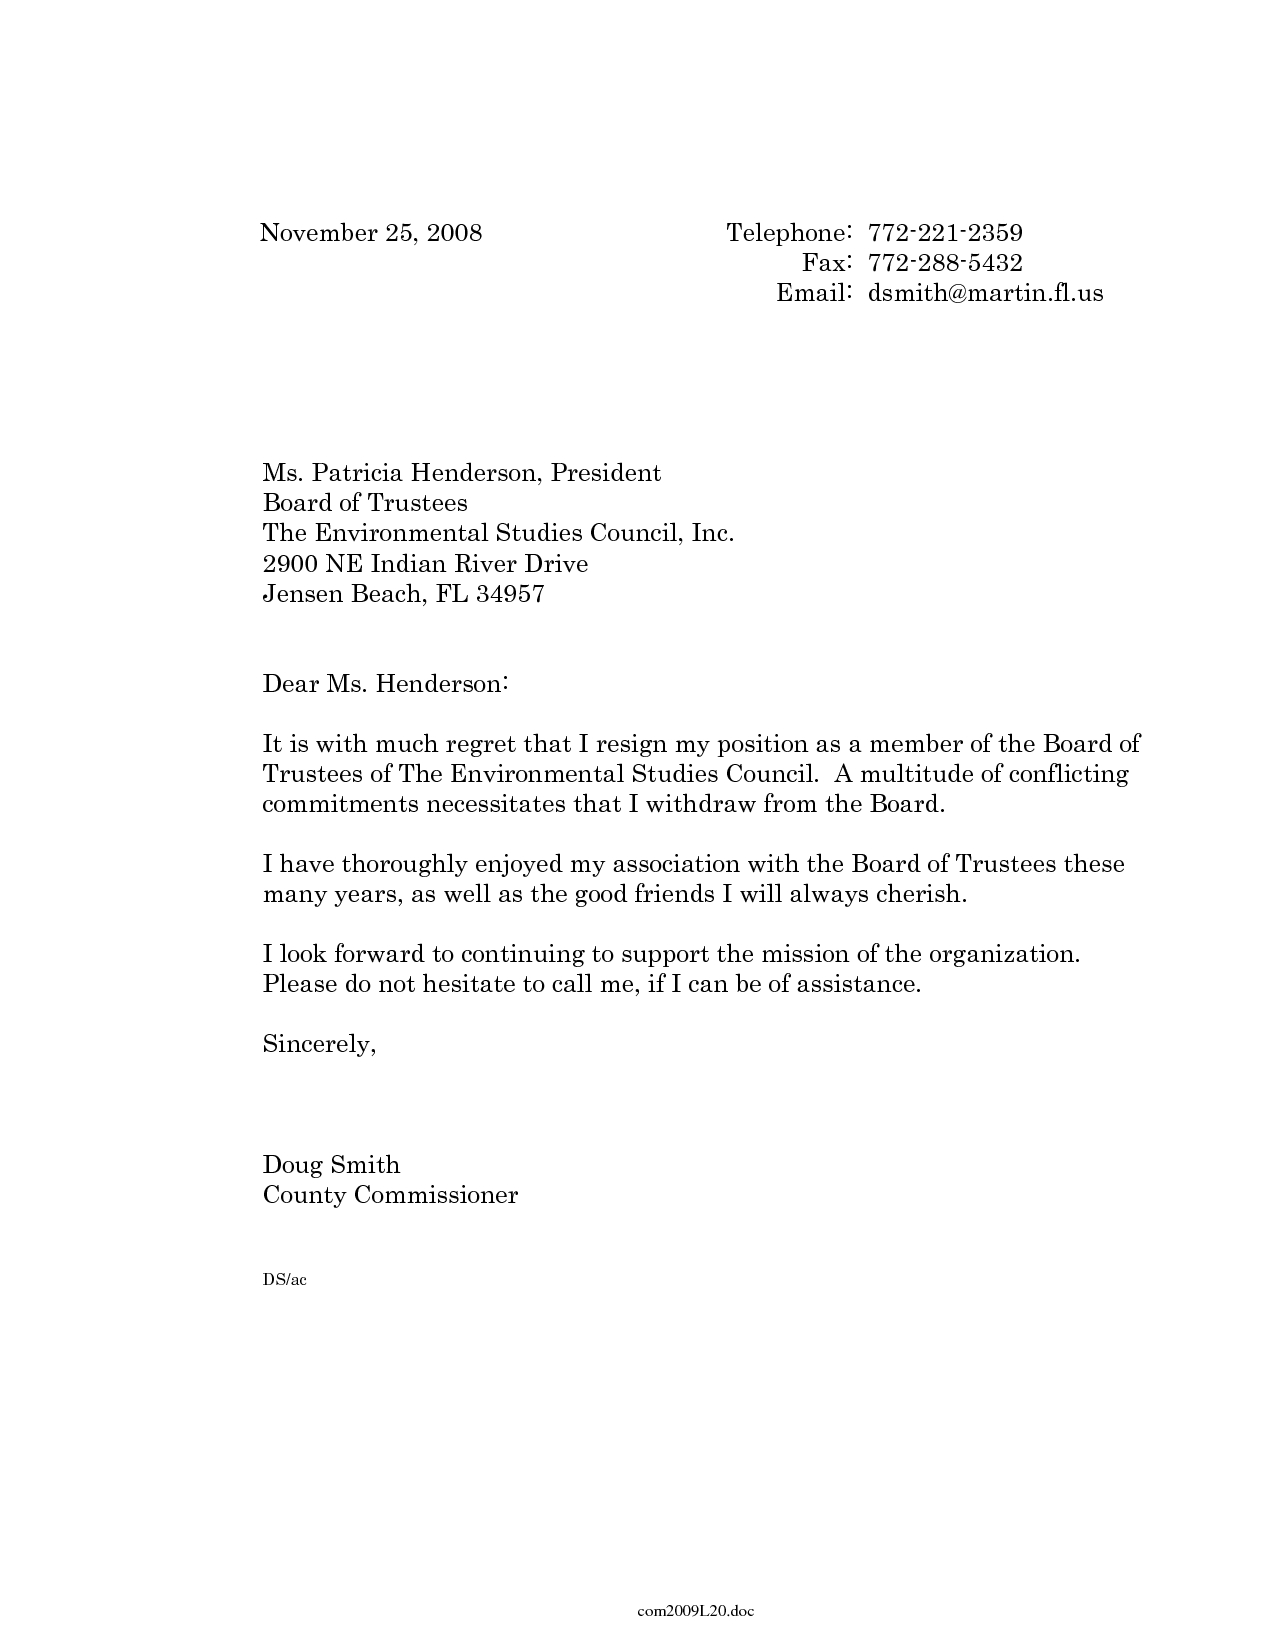 Board Of Directors Letter Template